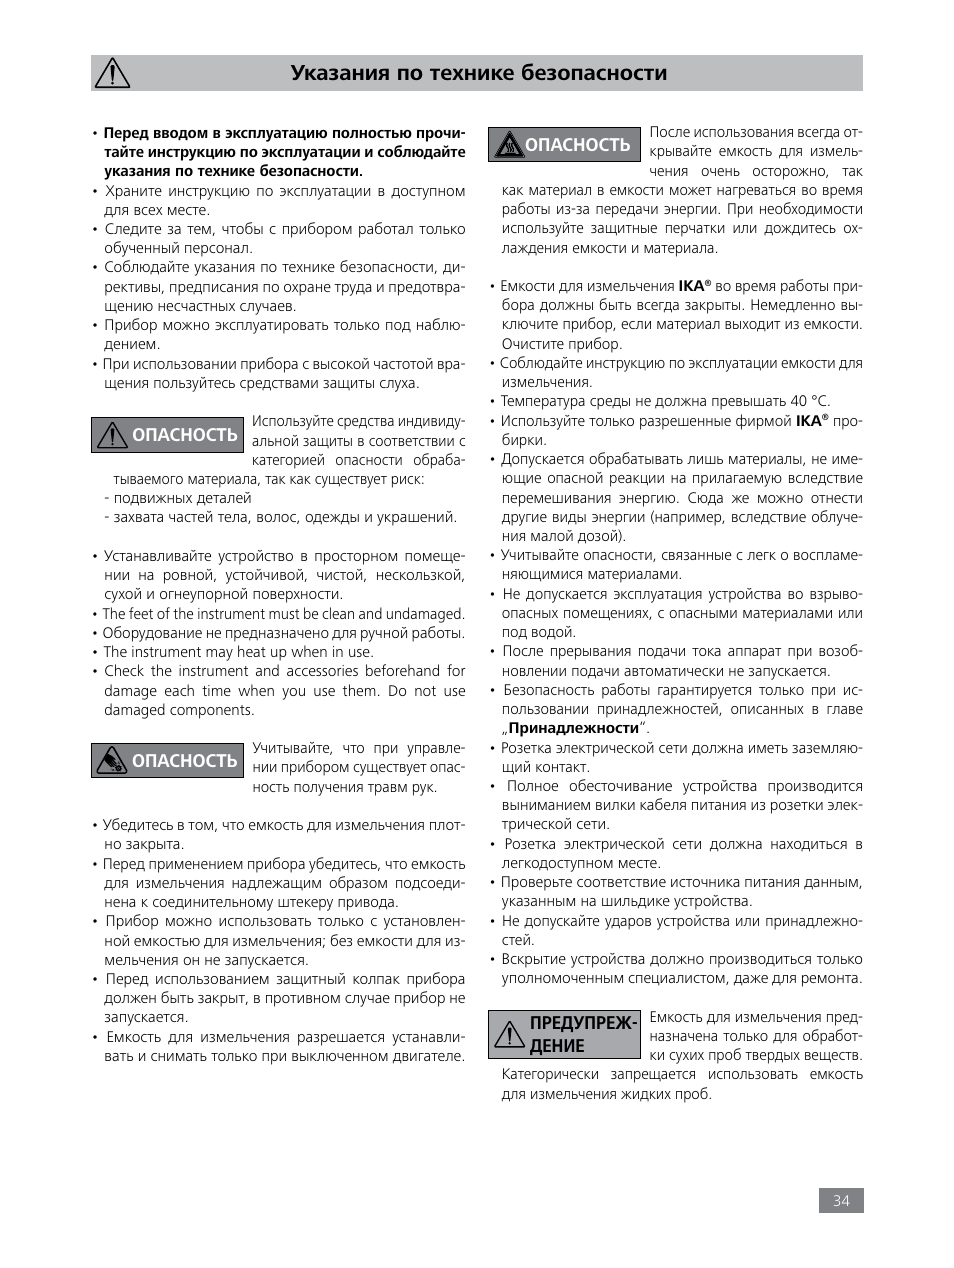 Указания по технике безопасности | IKA Tube Mill control User Manual | Page 34 / 64